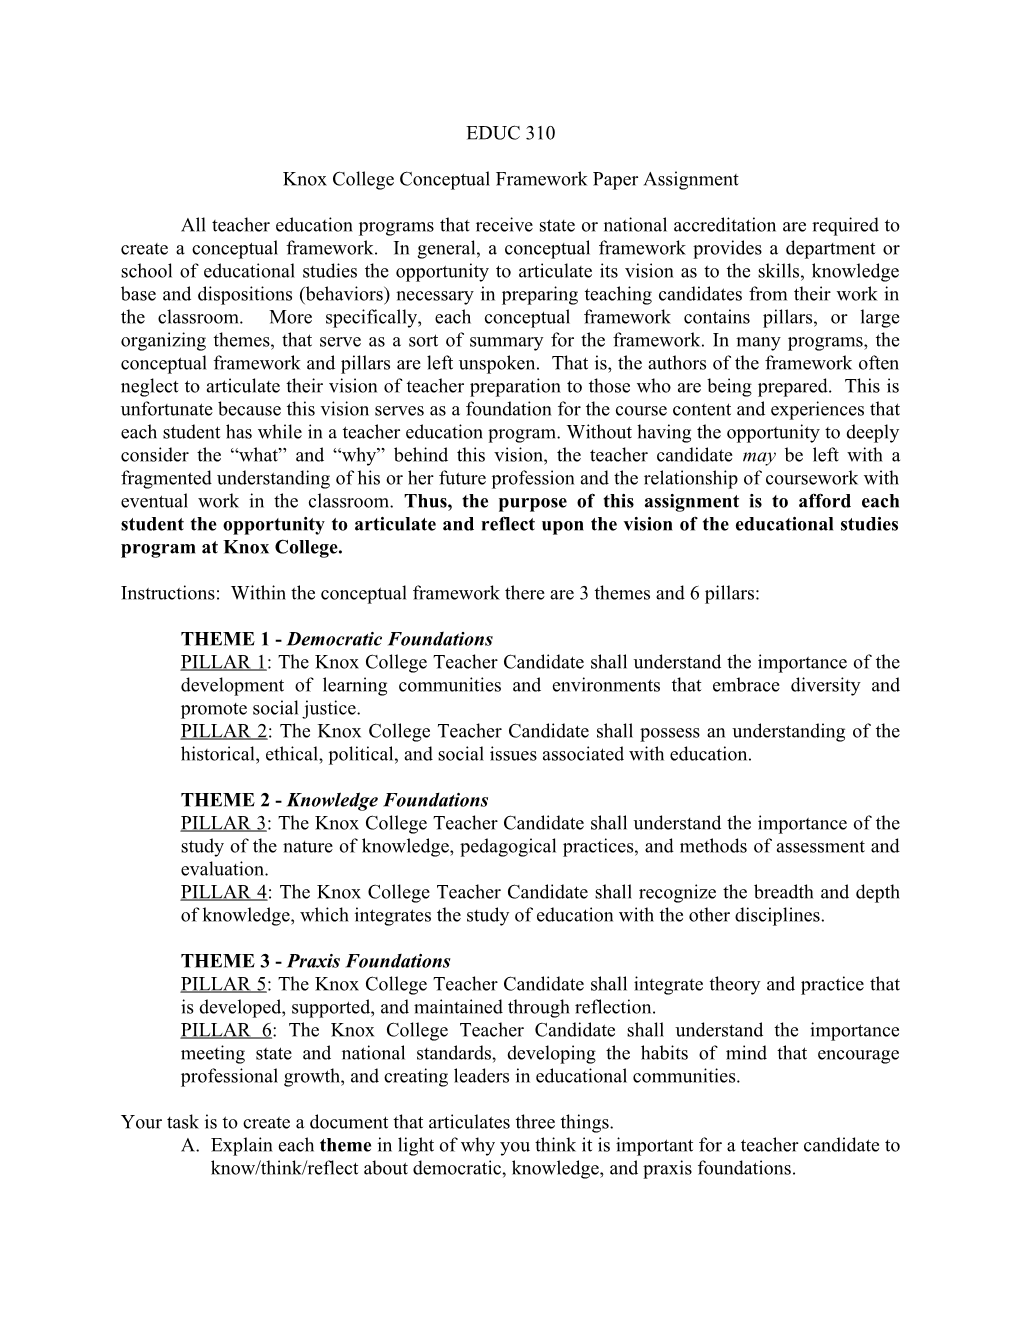 Knox College Conceptual Framework Paper Assignment